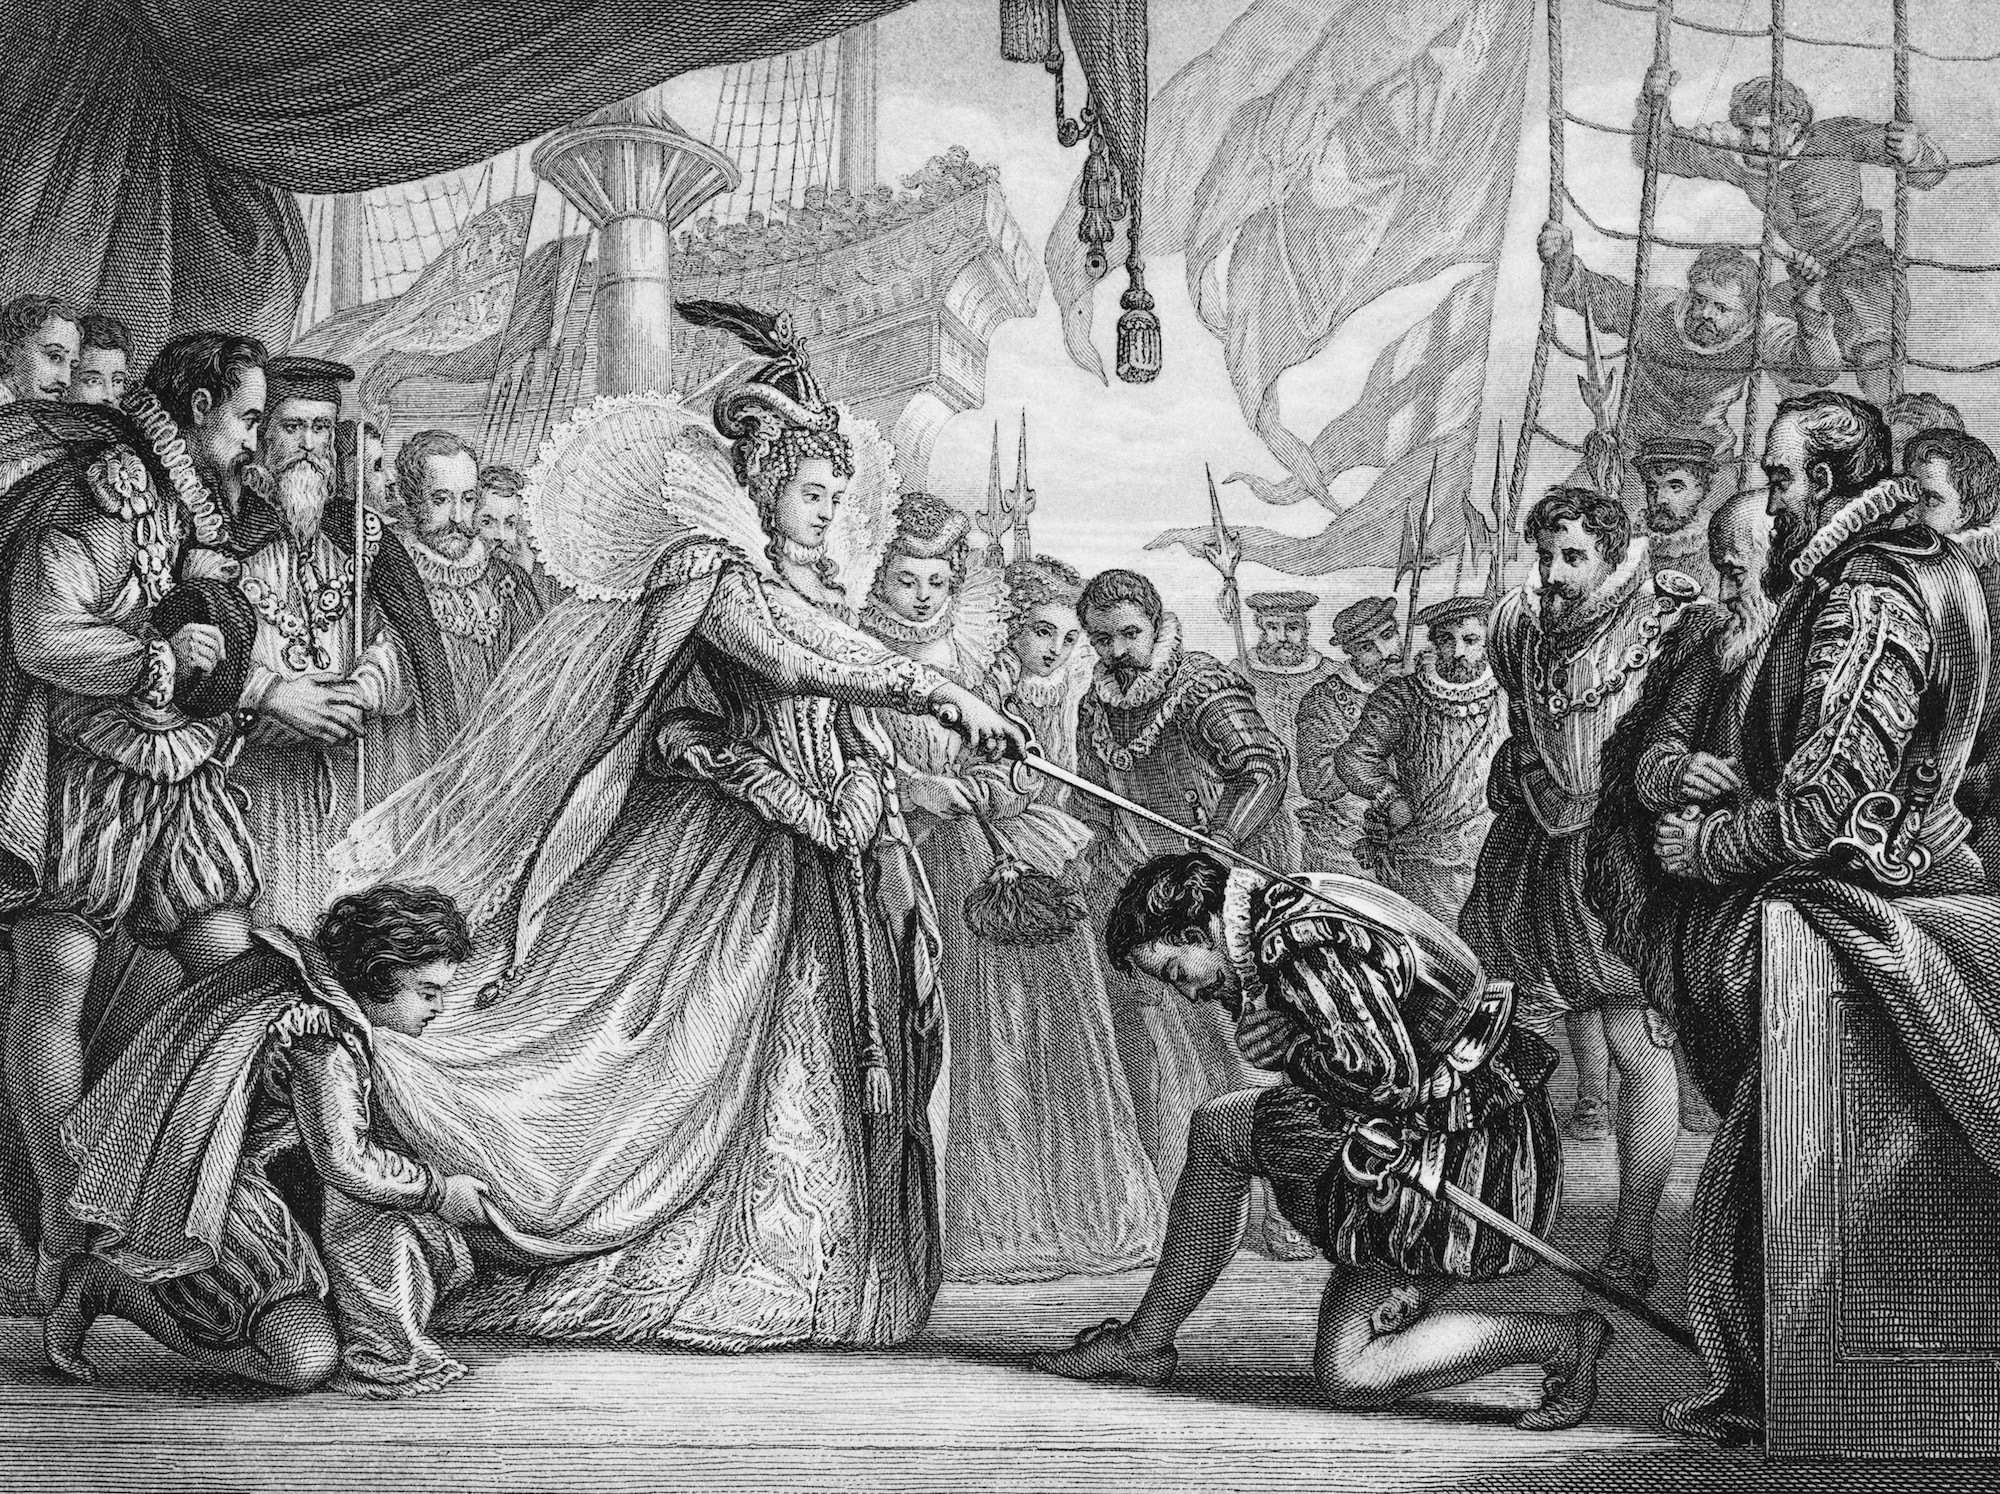 Queen Elizabeth I of England (1533 - 1603) knights explorer Sir Francis Drake